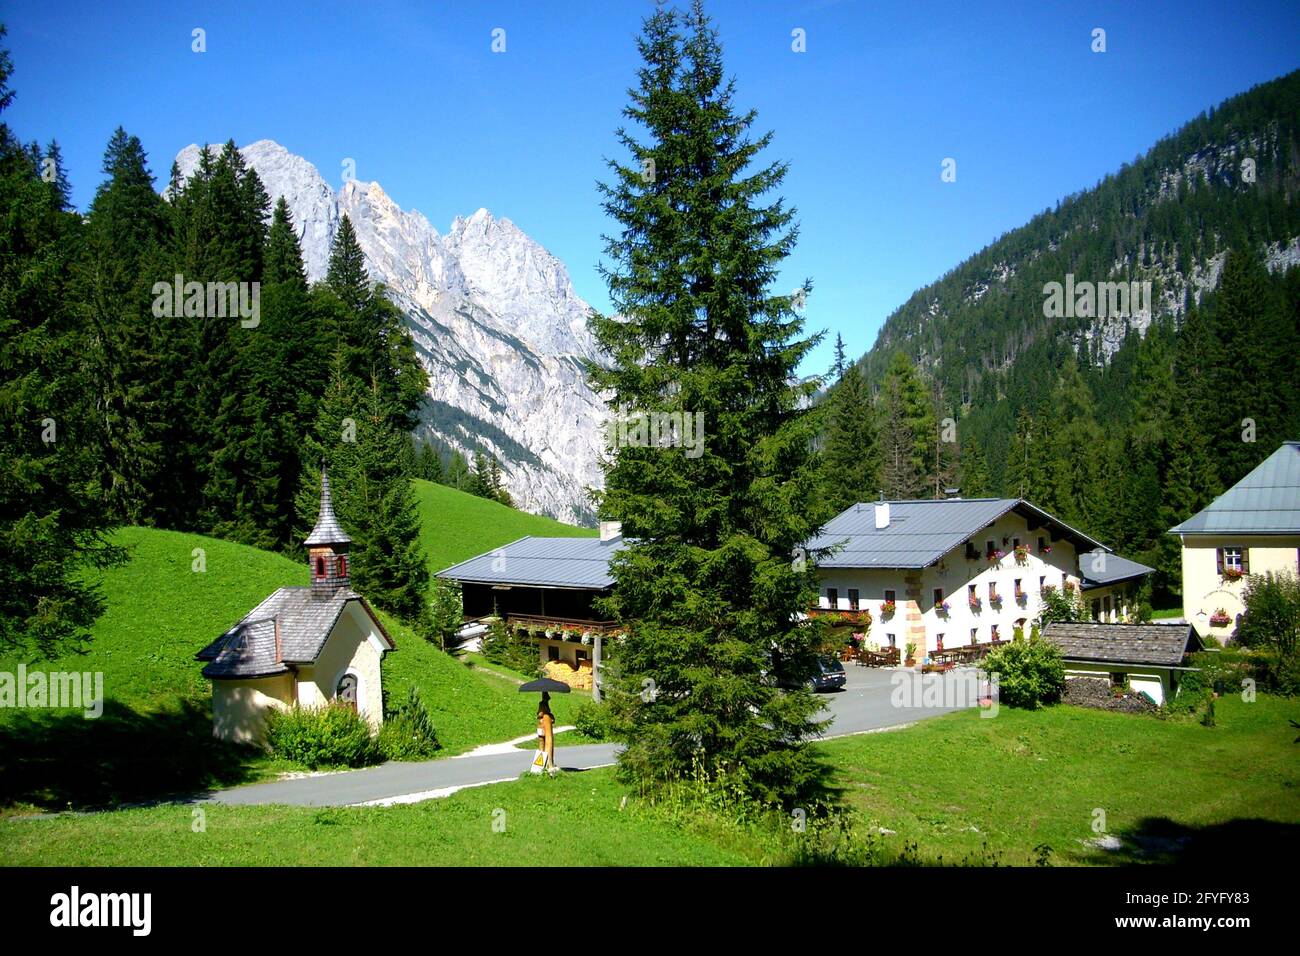 Vista su un villaggio idilliaco illuminato dal sole nelle Alpi Bavaresi, in Germania. Idylllisches Dorf in den Bayerischen Alpen, Ramsau, Berchtesgaden. Foto Stock